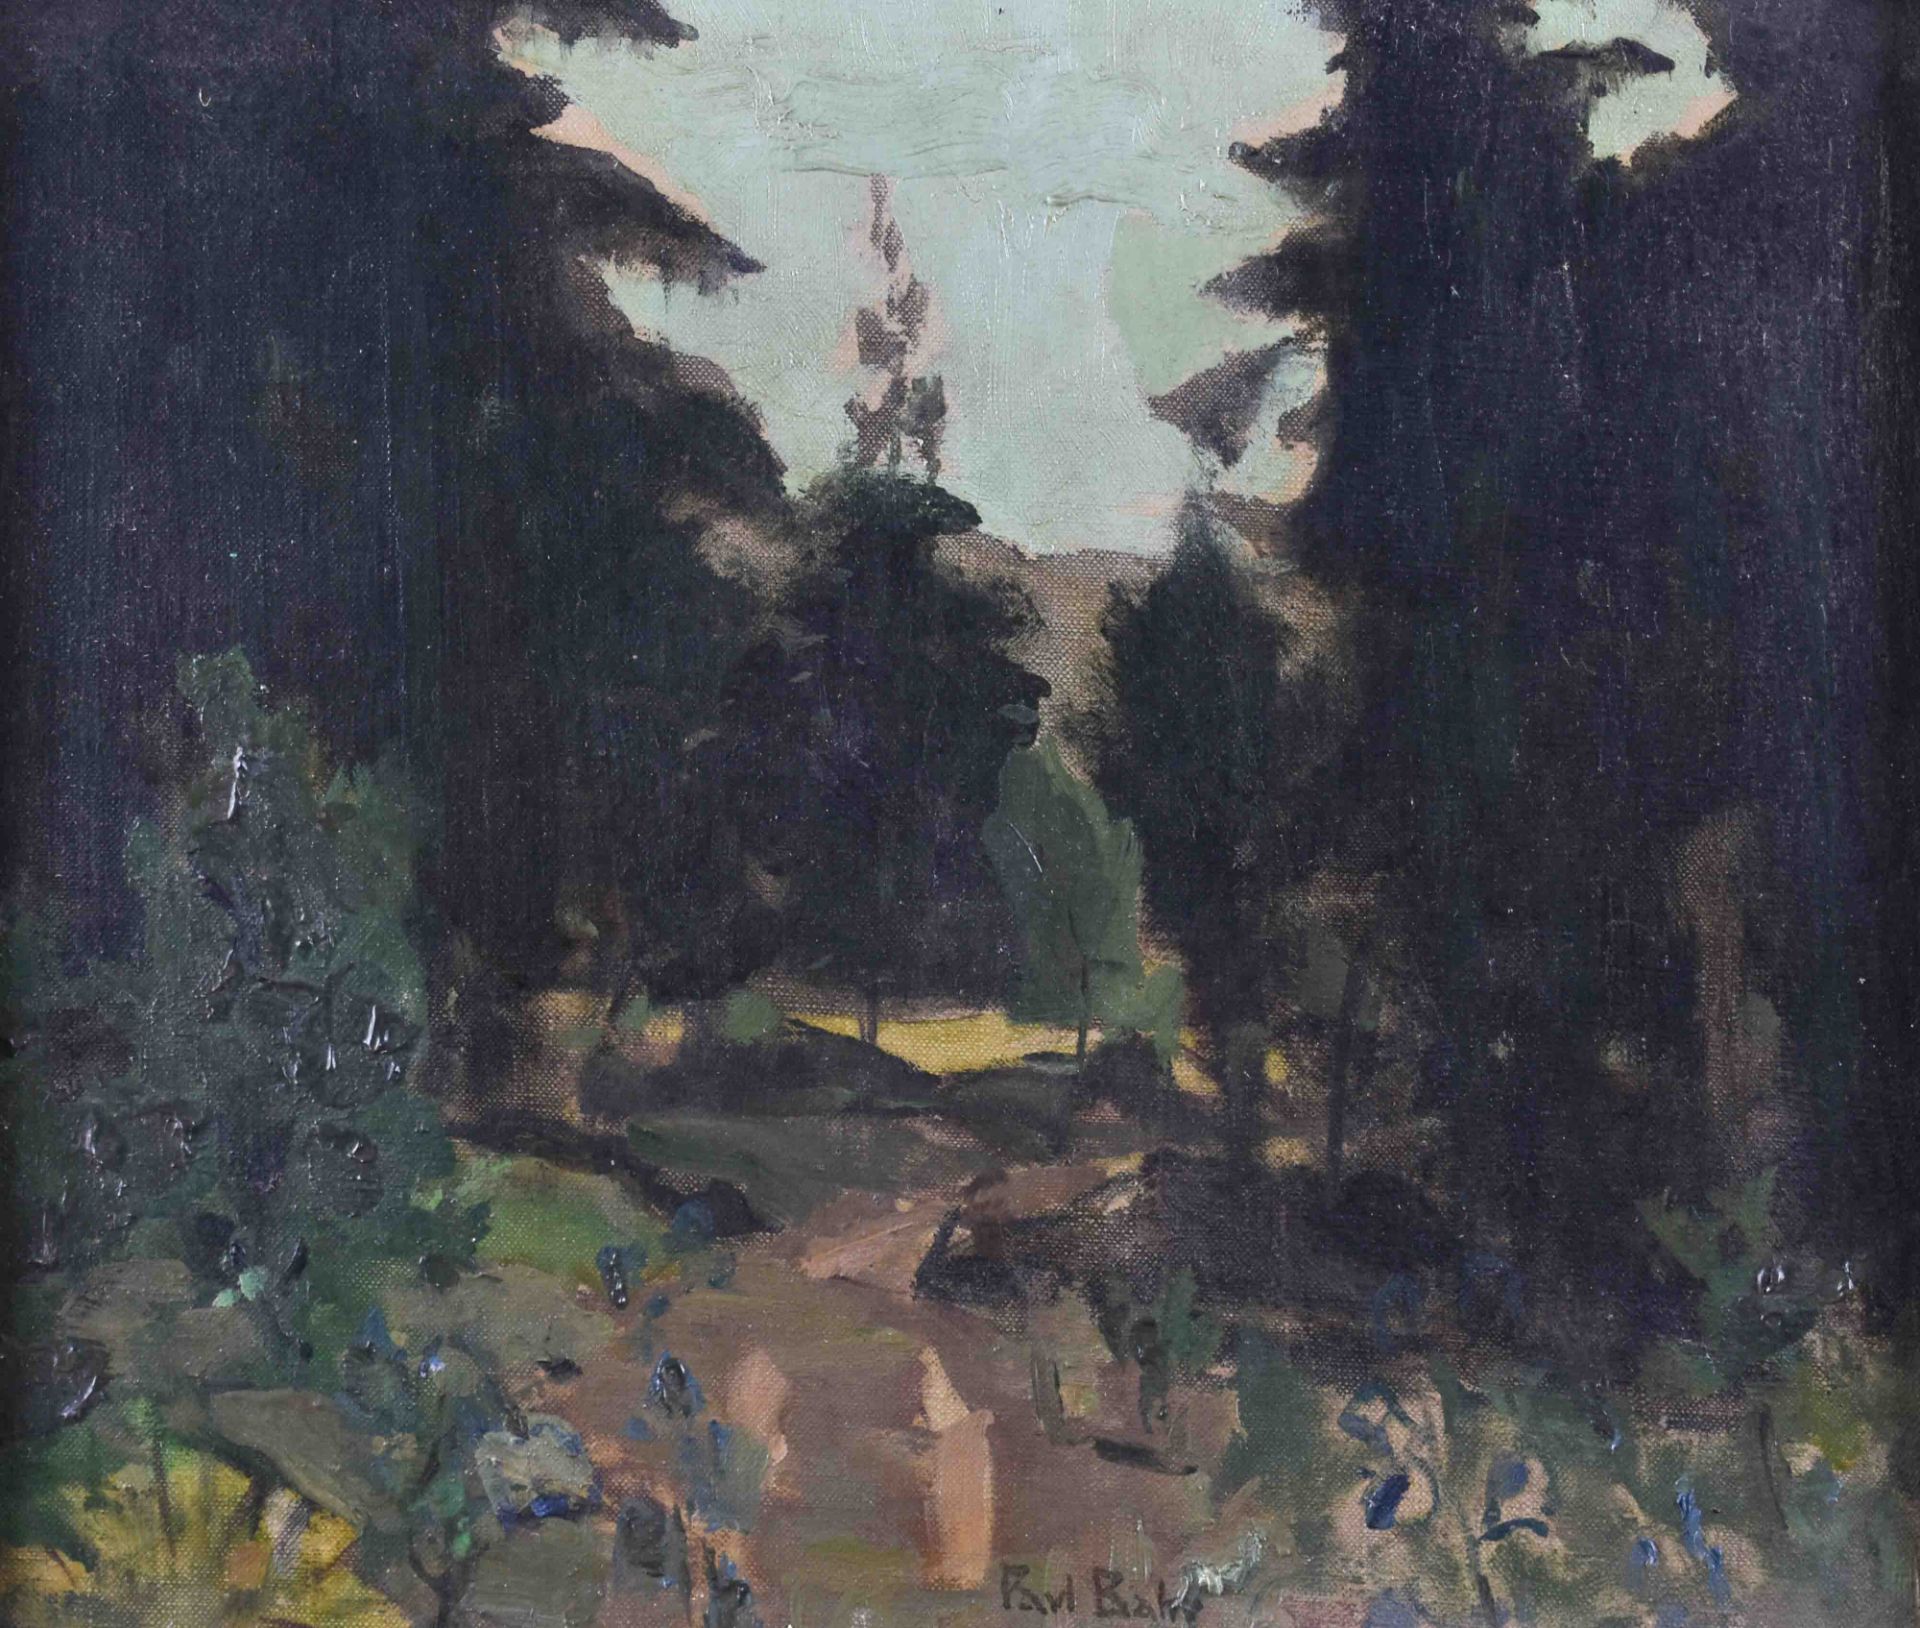 Paul BAHR (1883-1965)"Forest path"painting oil / canvas, framed 30.5 cm x 36 cm, 44 cm x 49 cm